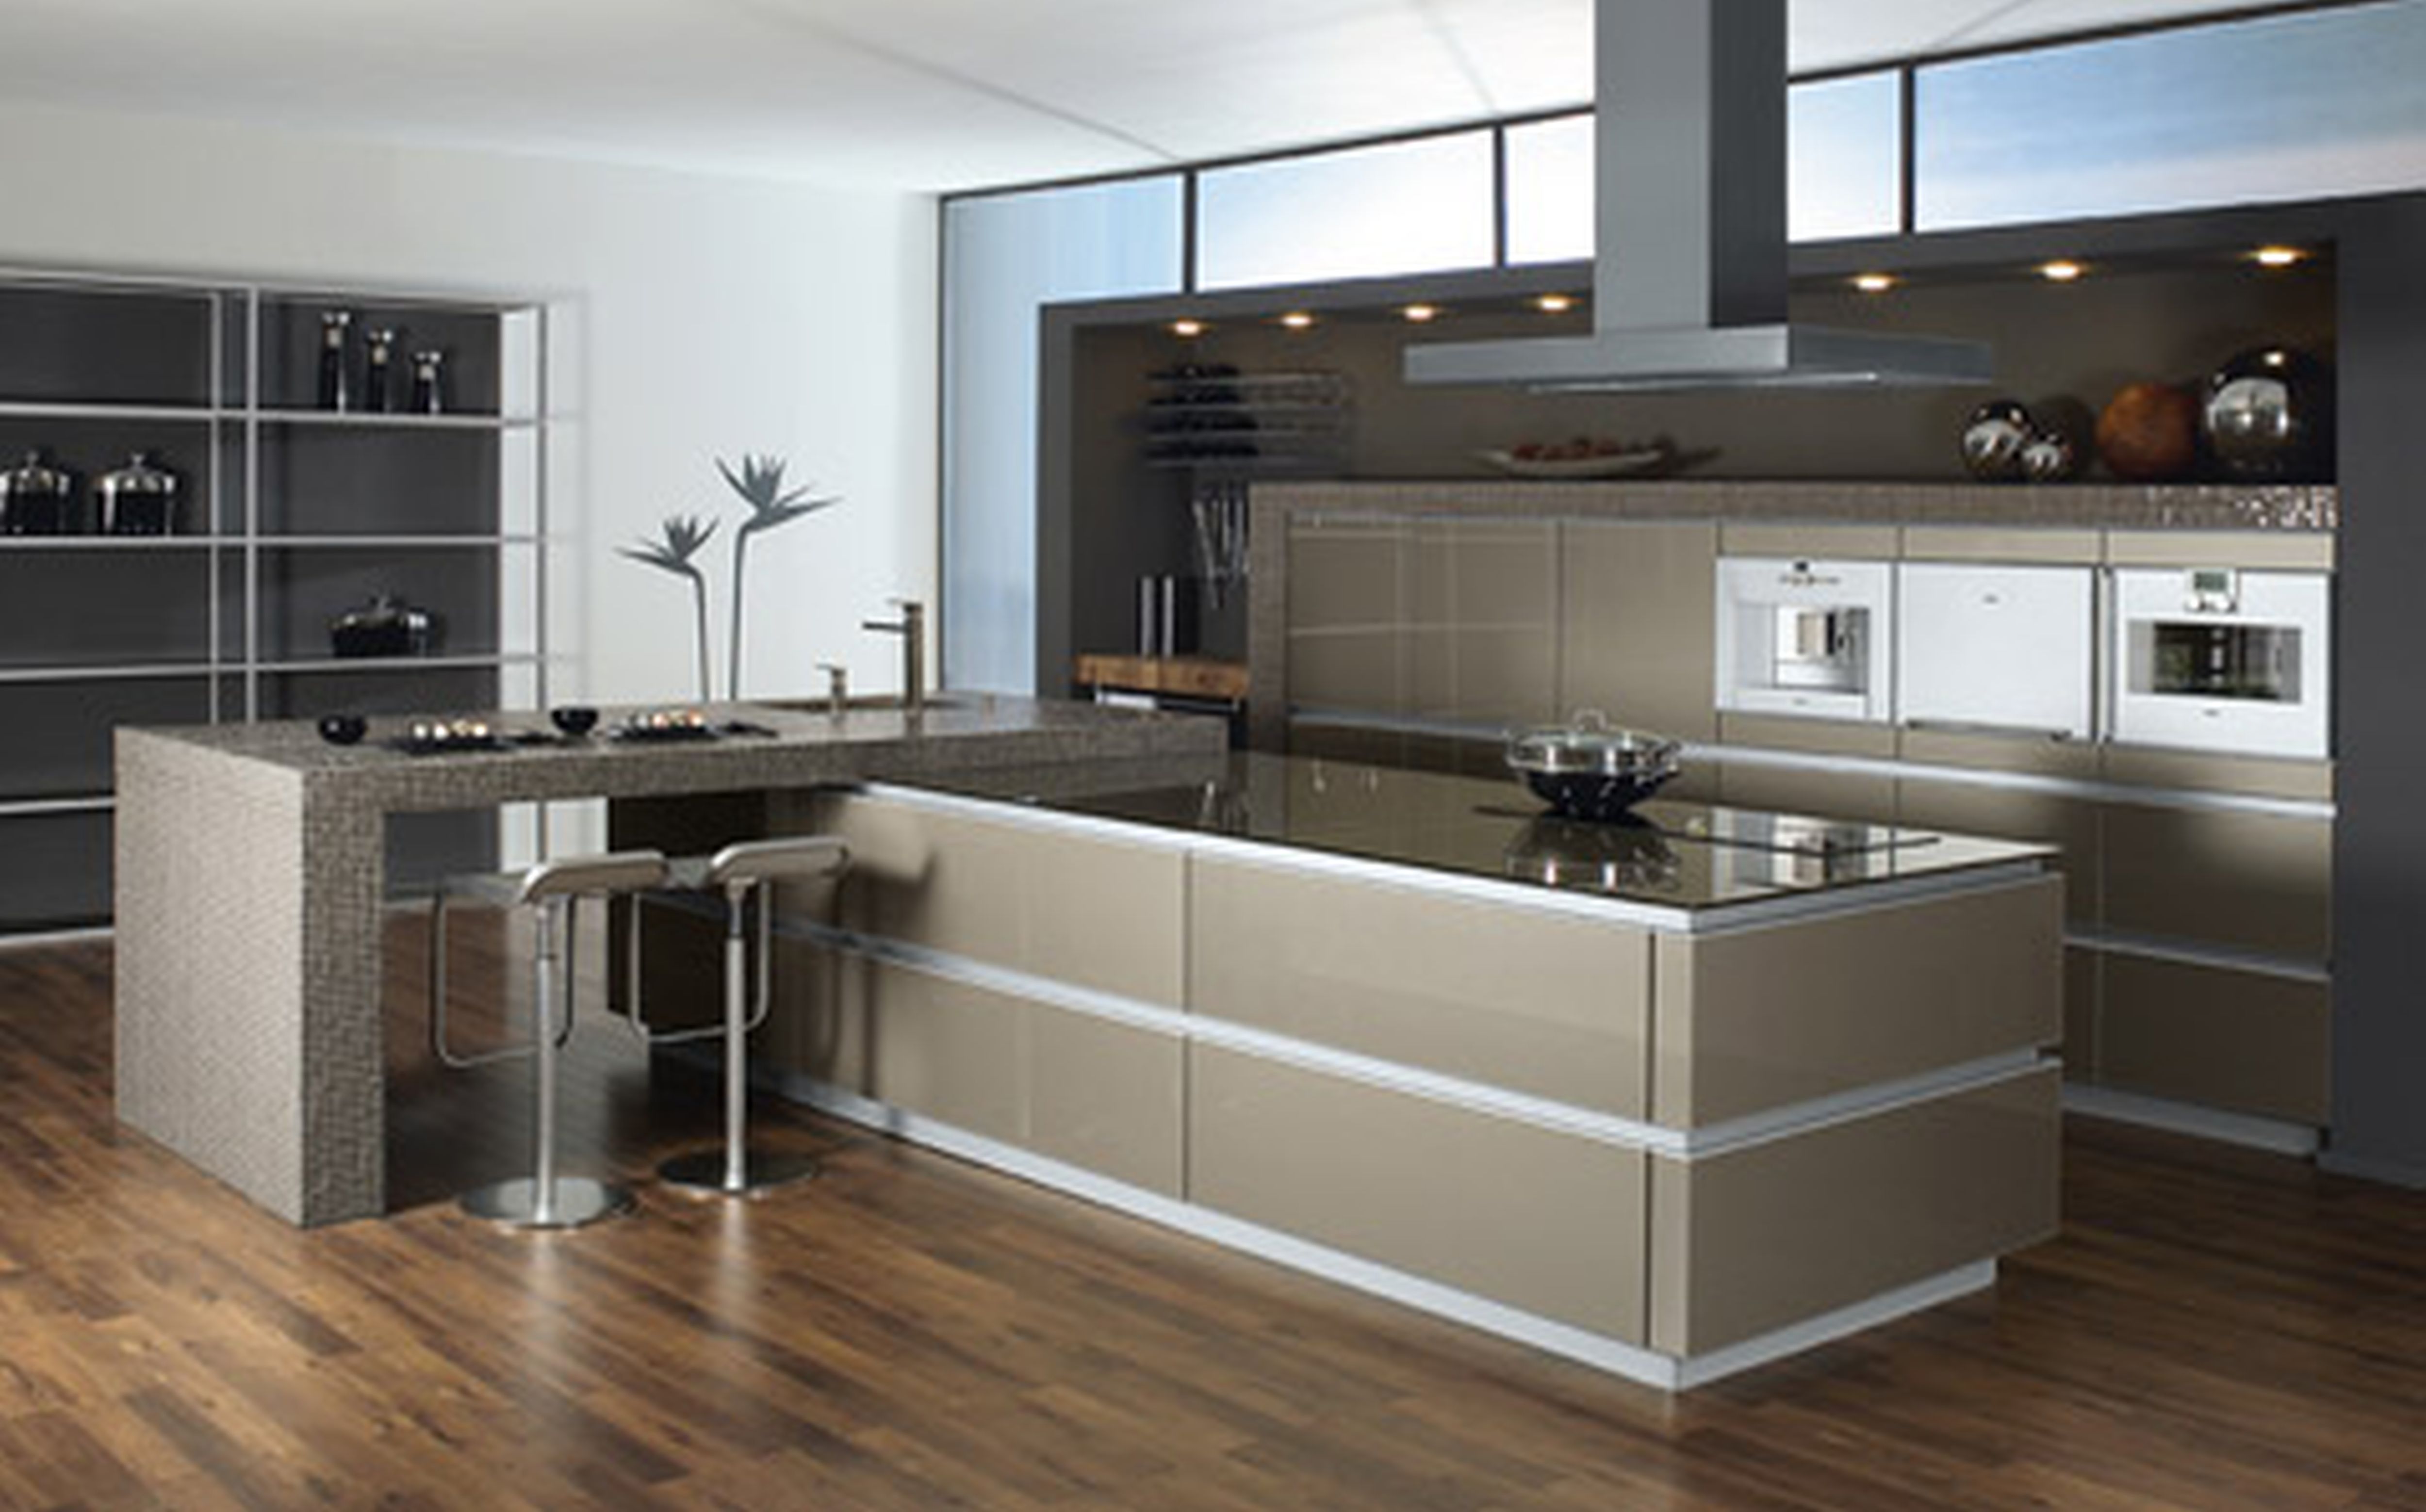 35 Modern Kitchen Design Inspiration - Decor at Home